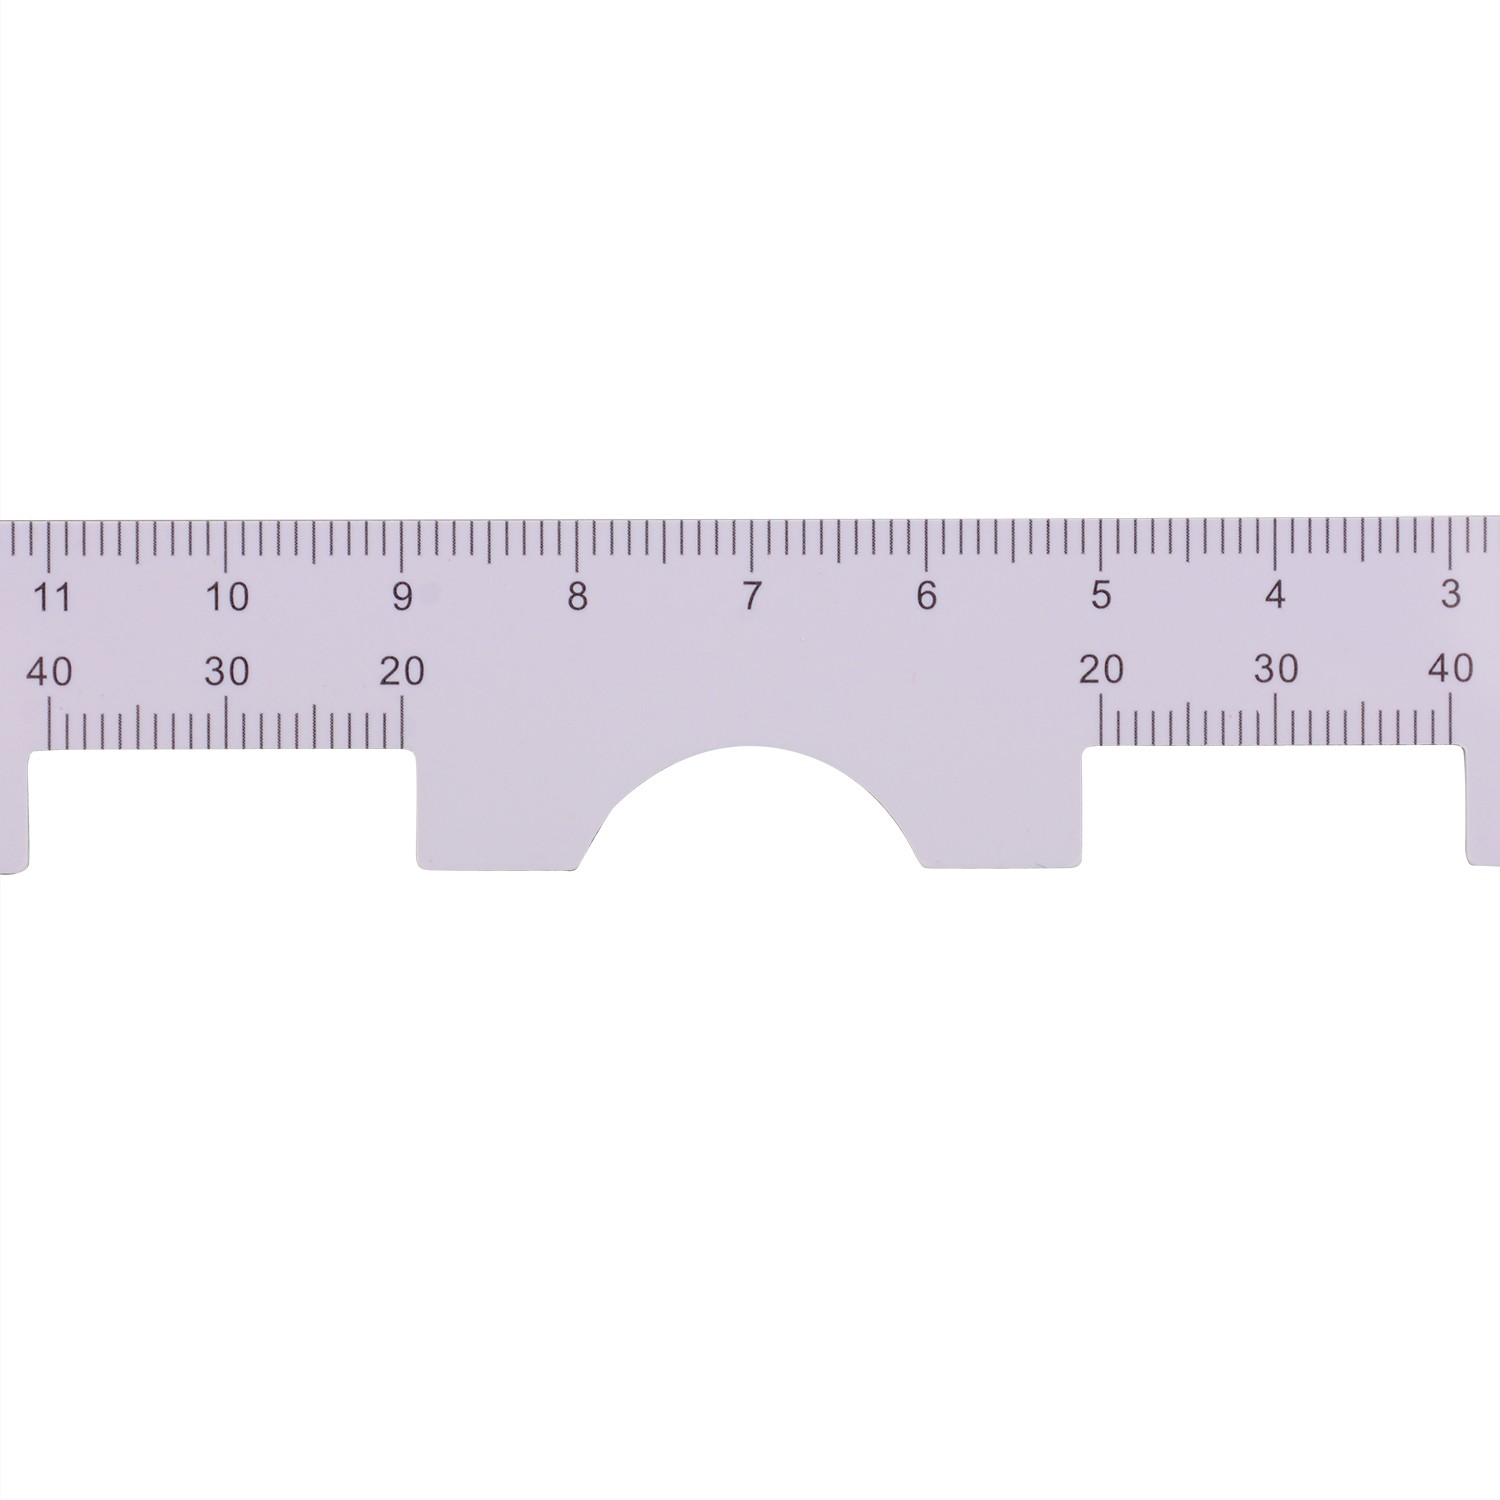 Promotional PD Ruler Measurement Tool